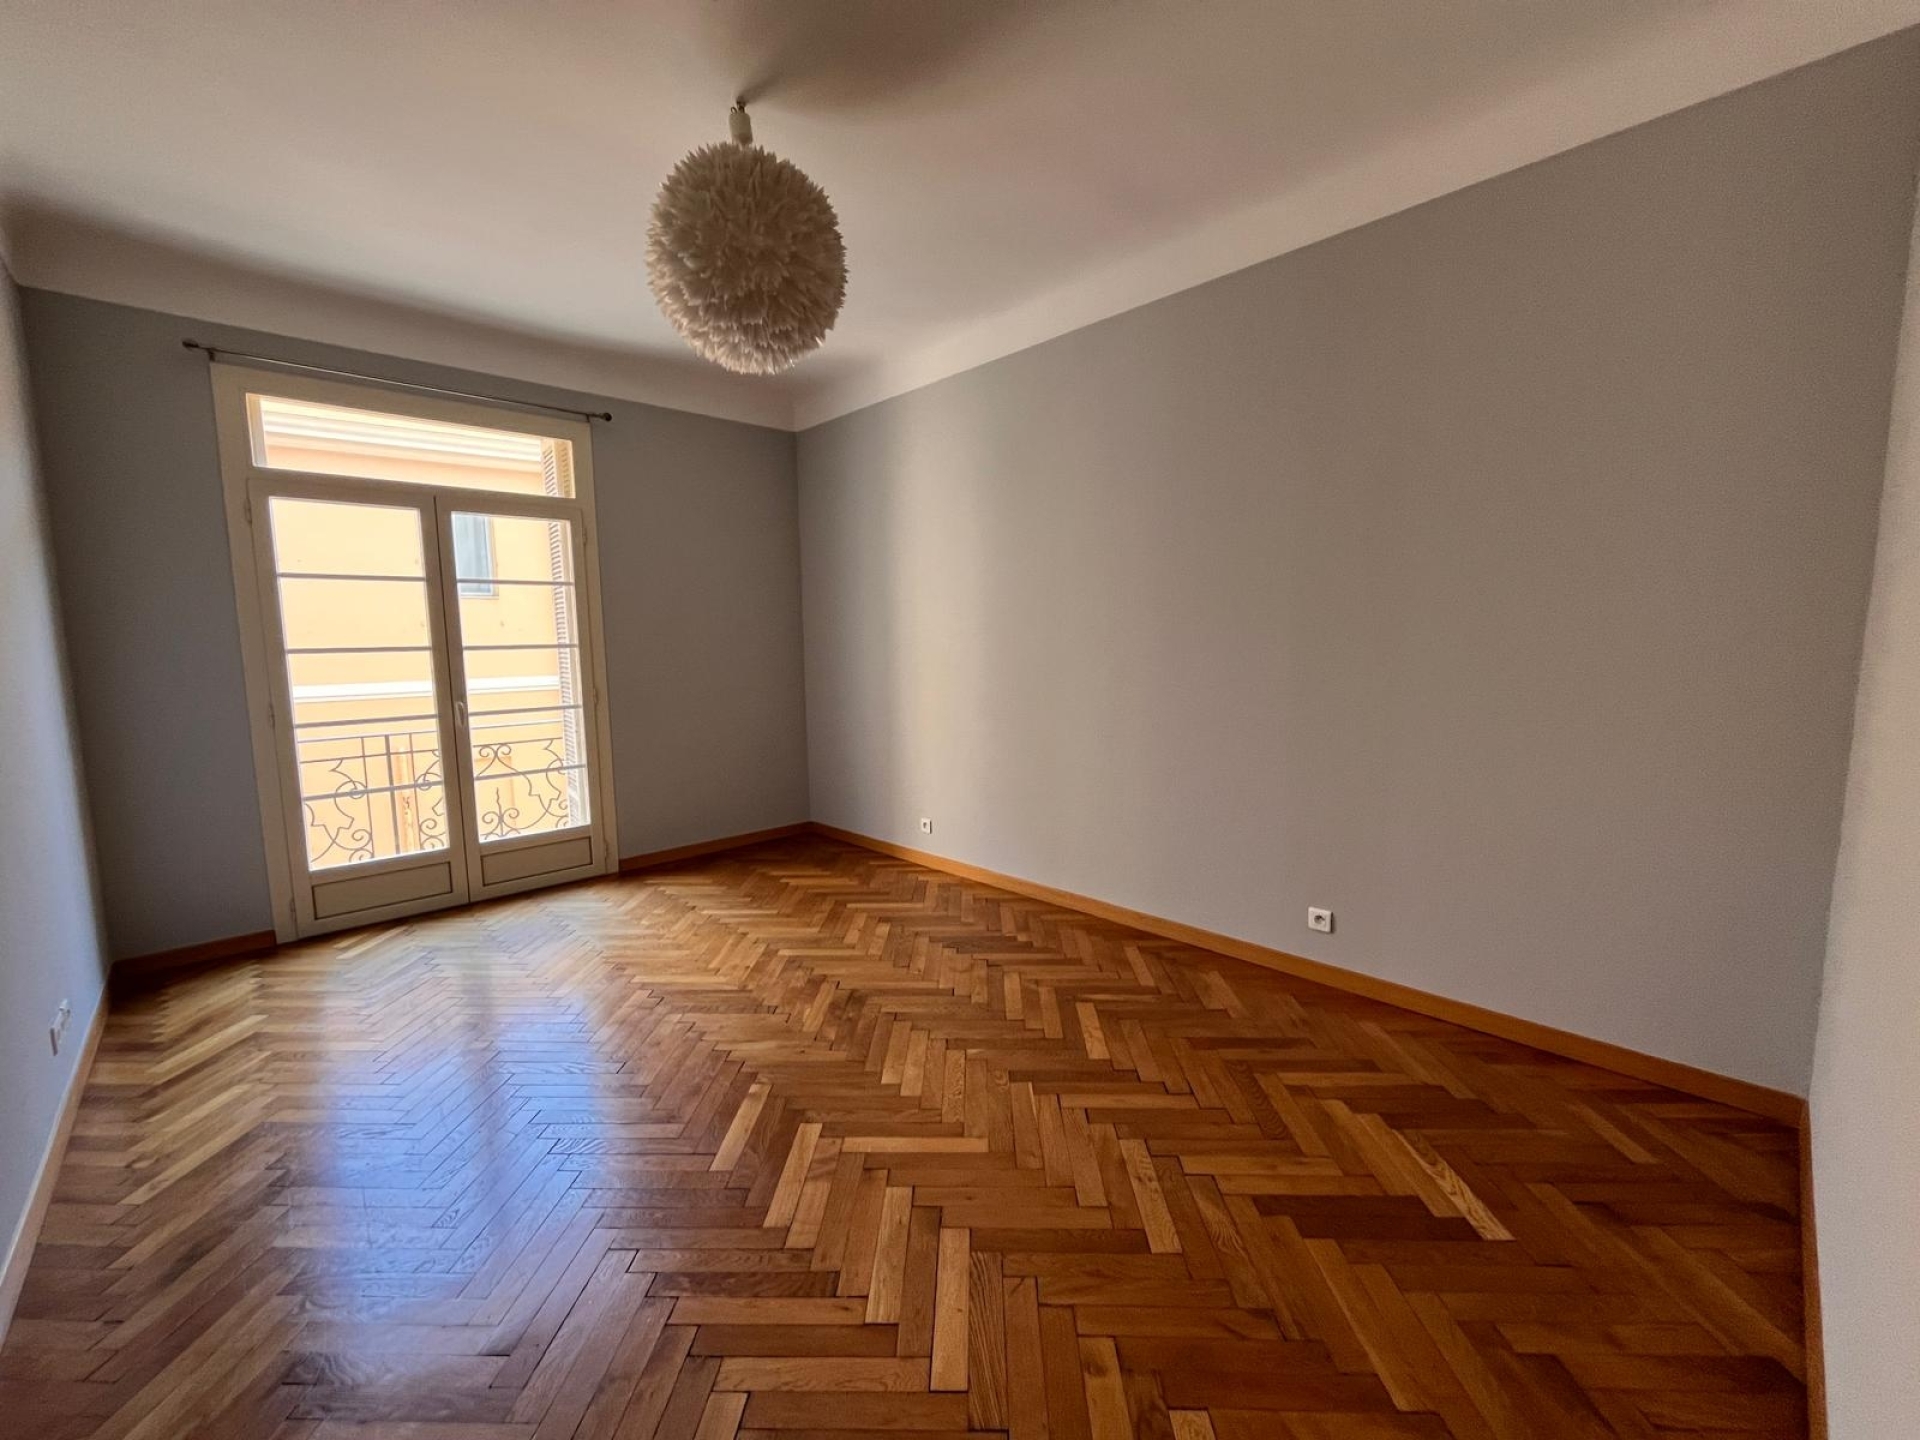 Dotta 2 rooms apartment for rent - GIARDINETTO - Monaco-Ville - Monaco - imgimage00005